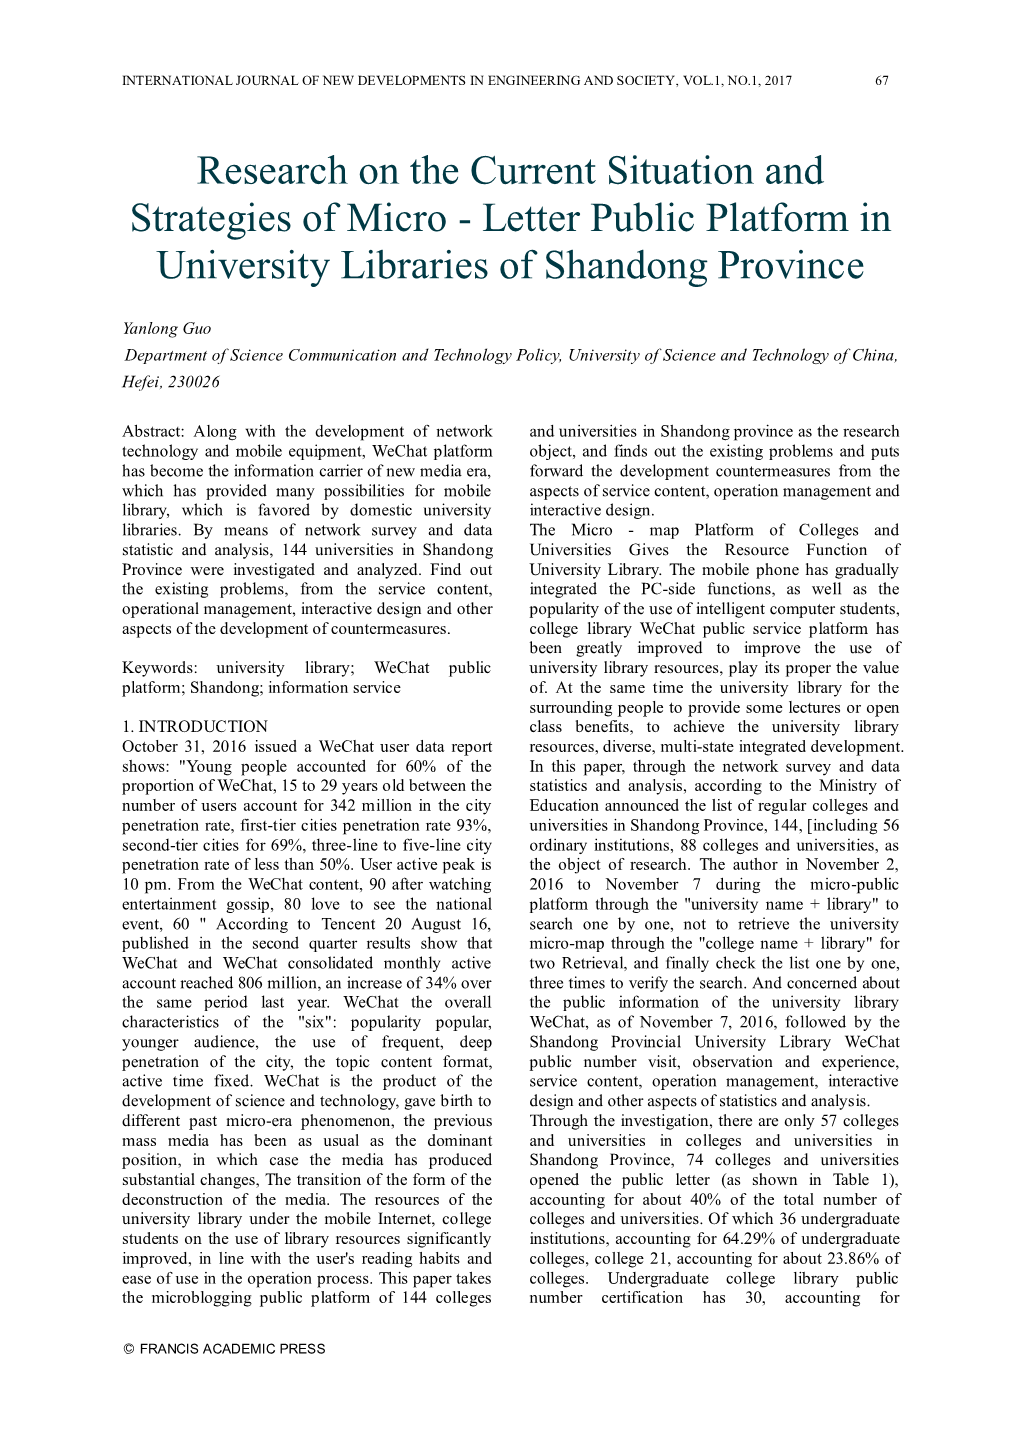 Letter Public Platform in University Libraries of Shandong Province